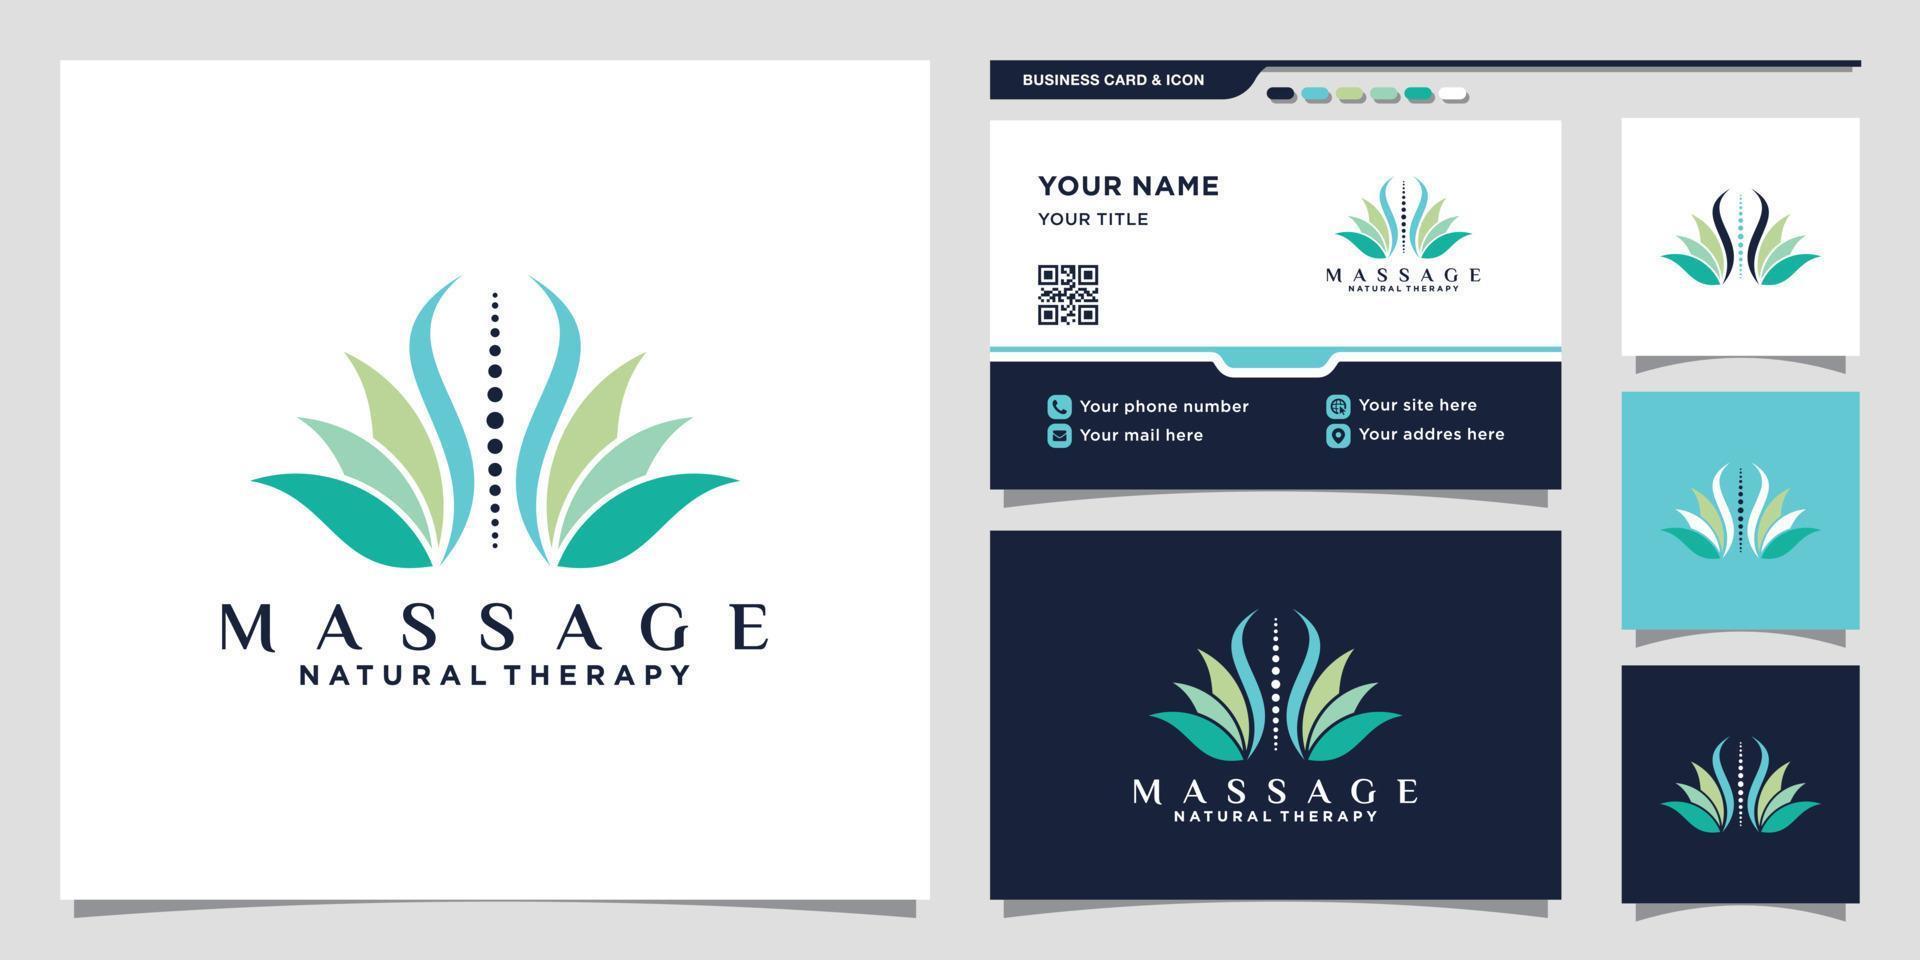 massagetherapie-logo mit kreativem konzept und visitenkartendesign premium-vektor vektor